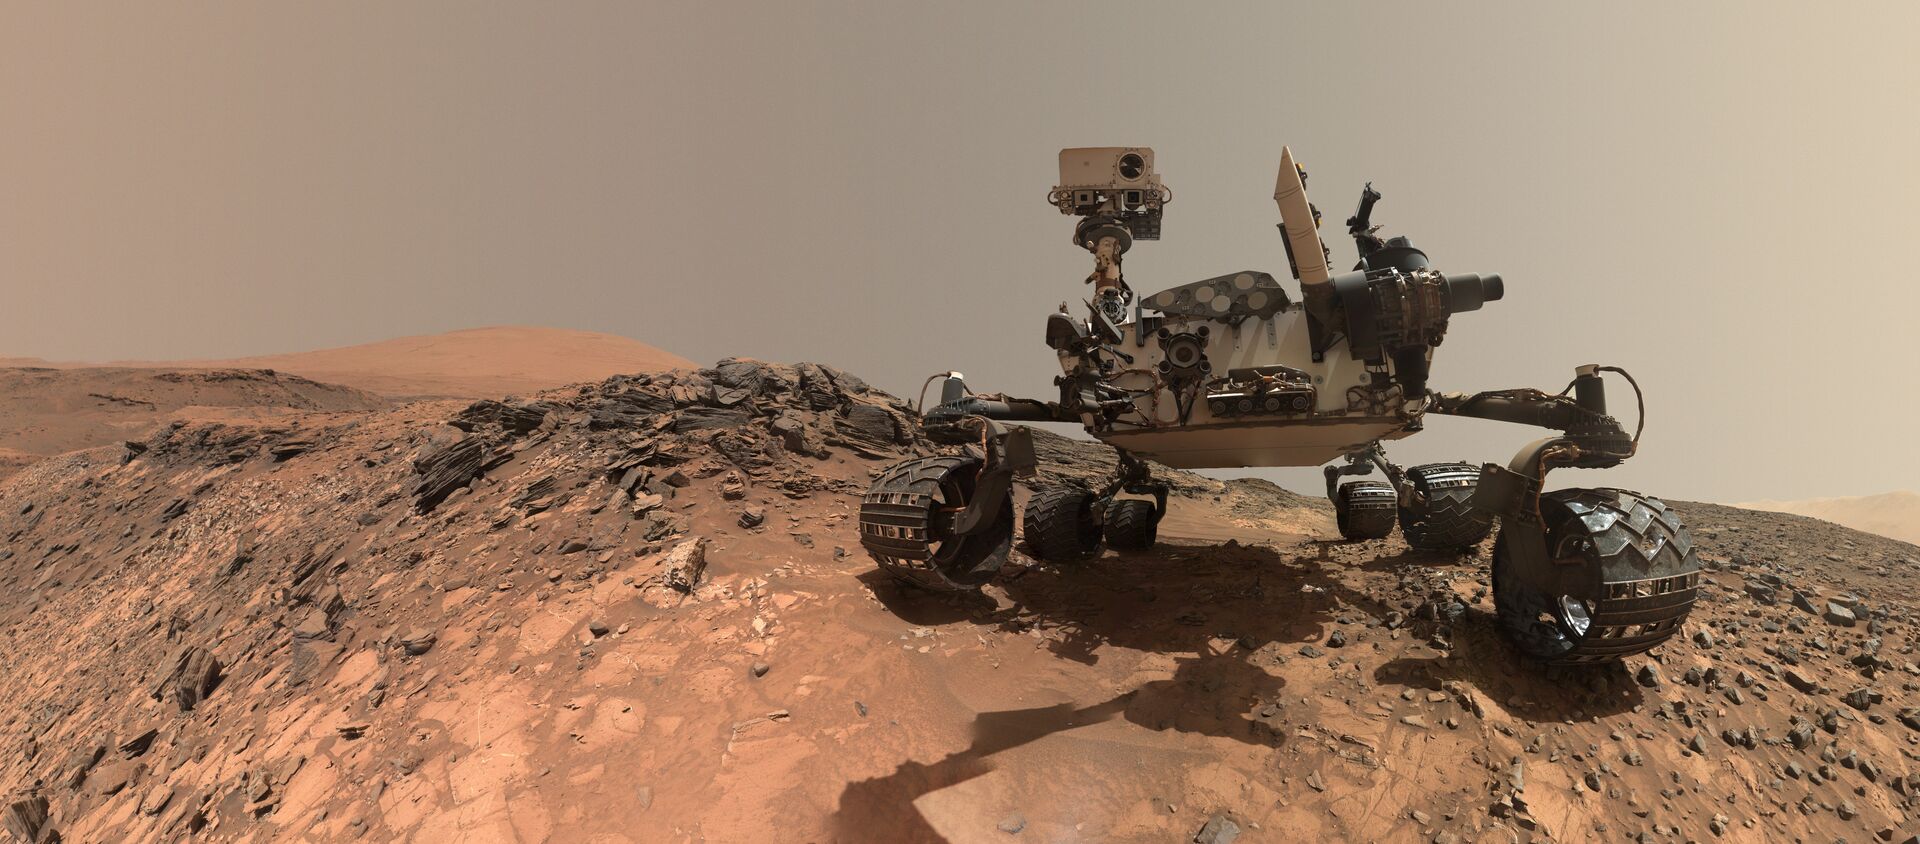 Curiosity Rover марсоходи - Sputnik Ўзбекистон, 1920, 24.01.2016